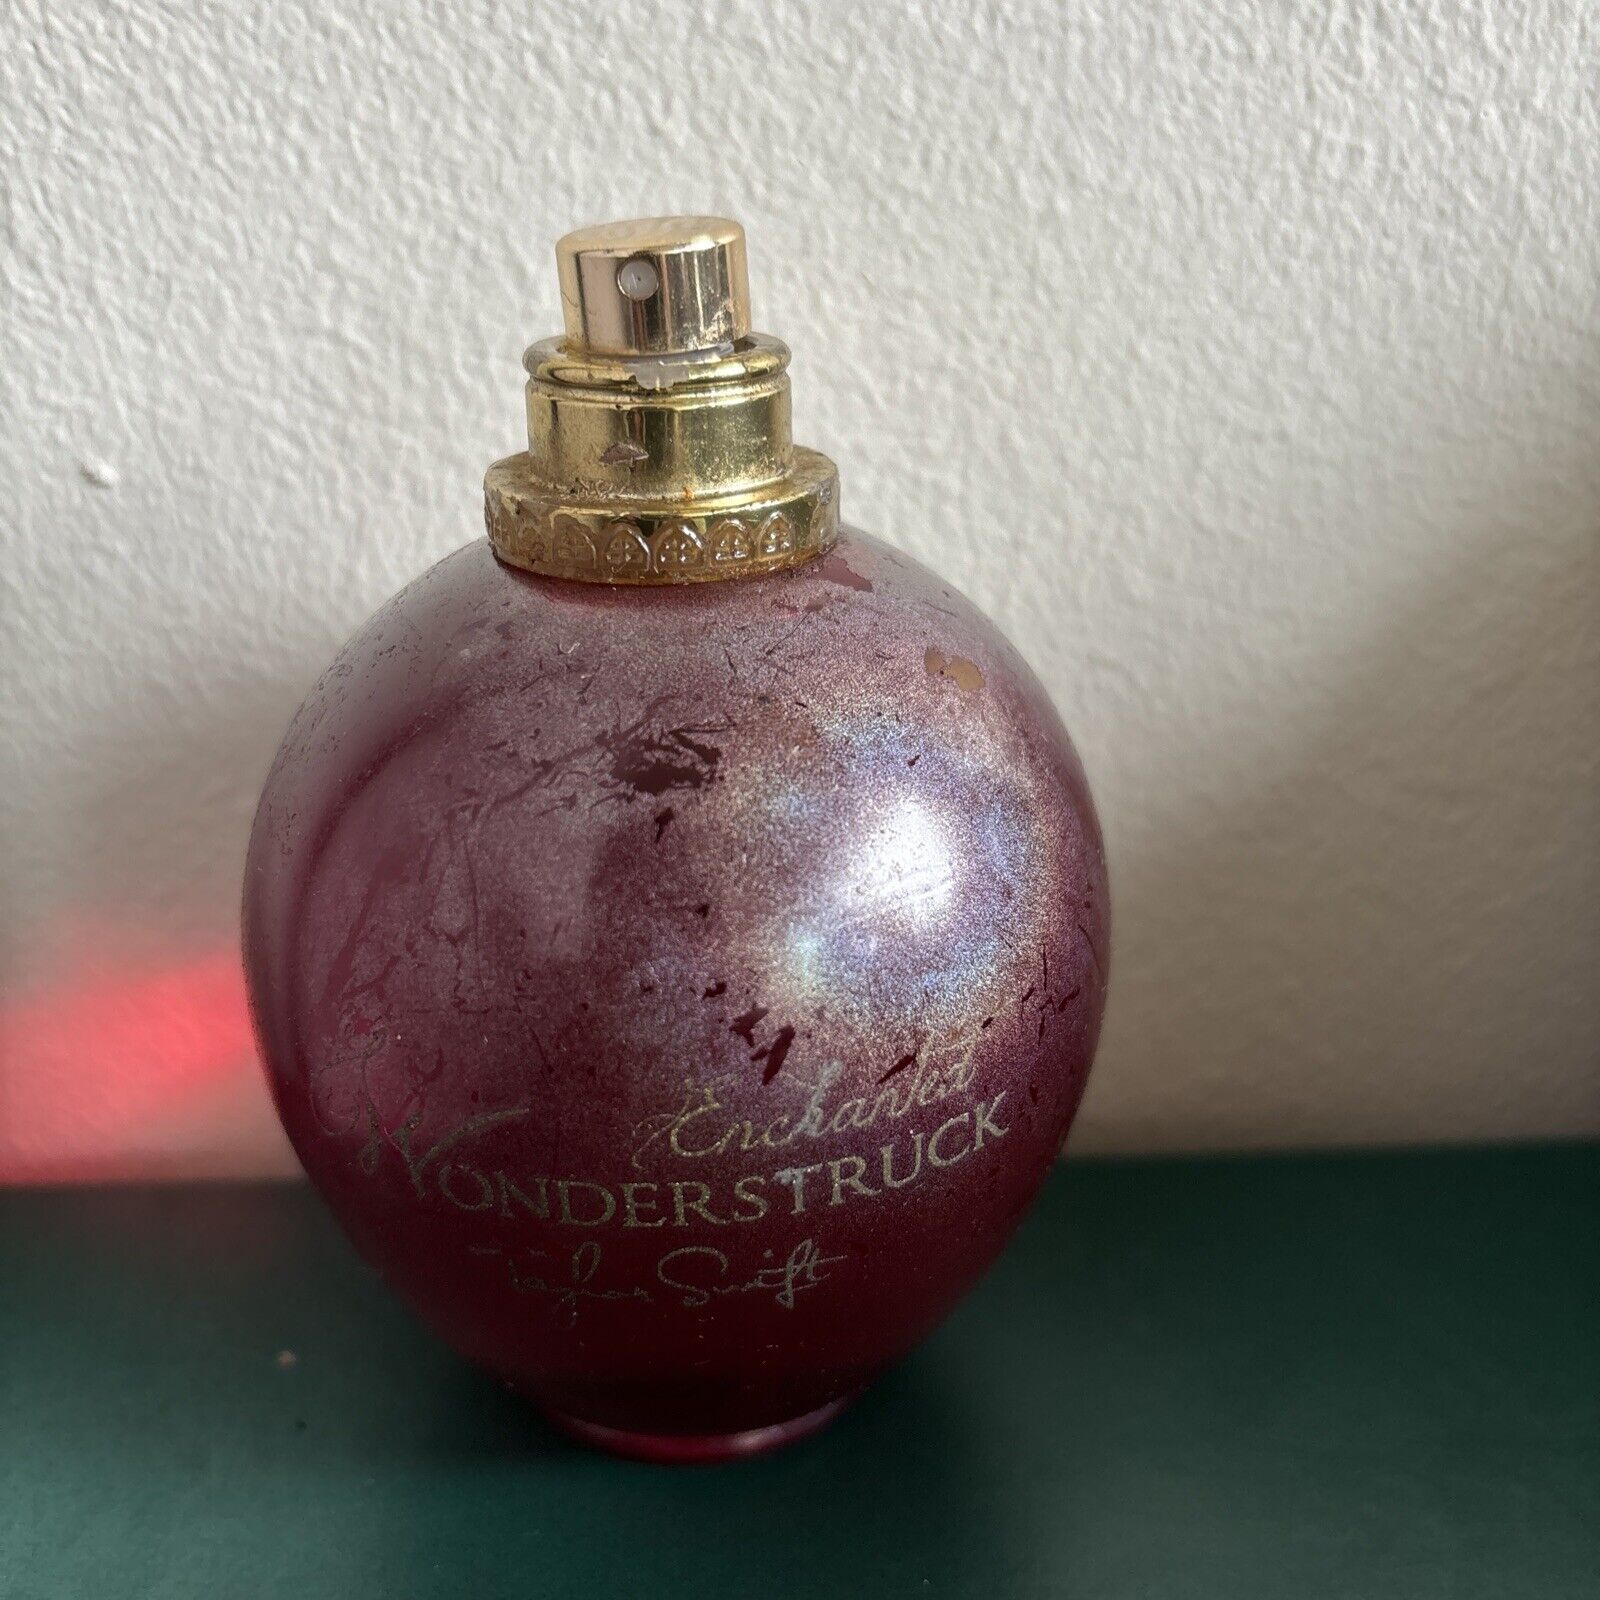 Enchanted Wonderstruck by Taylor Swift Eau de Parfum 3.4 oz Spray 100% Full